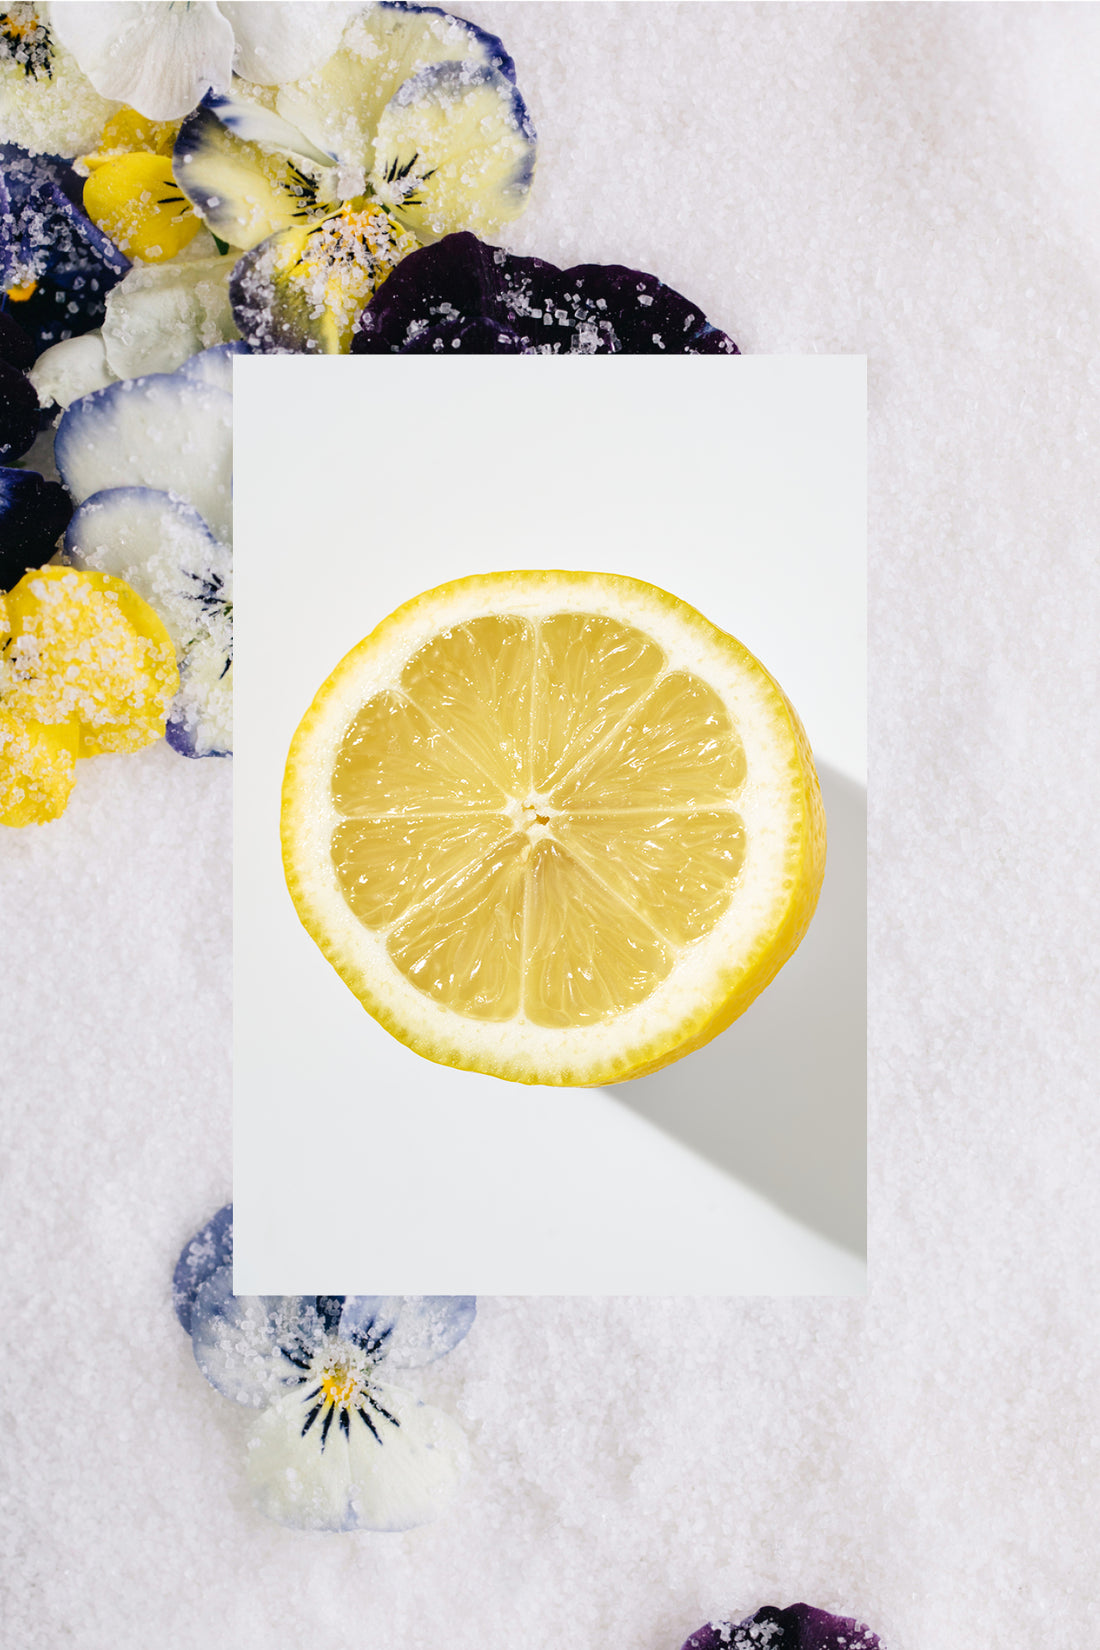 A fresh lemon slice, white sugar and flowers